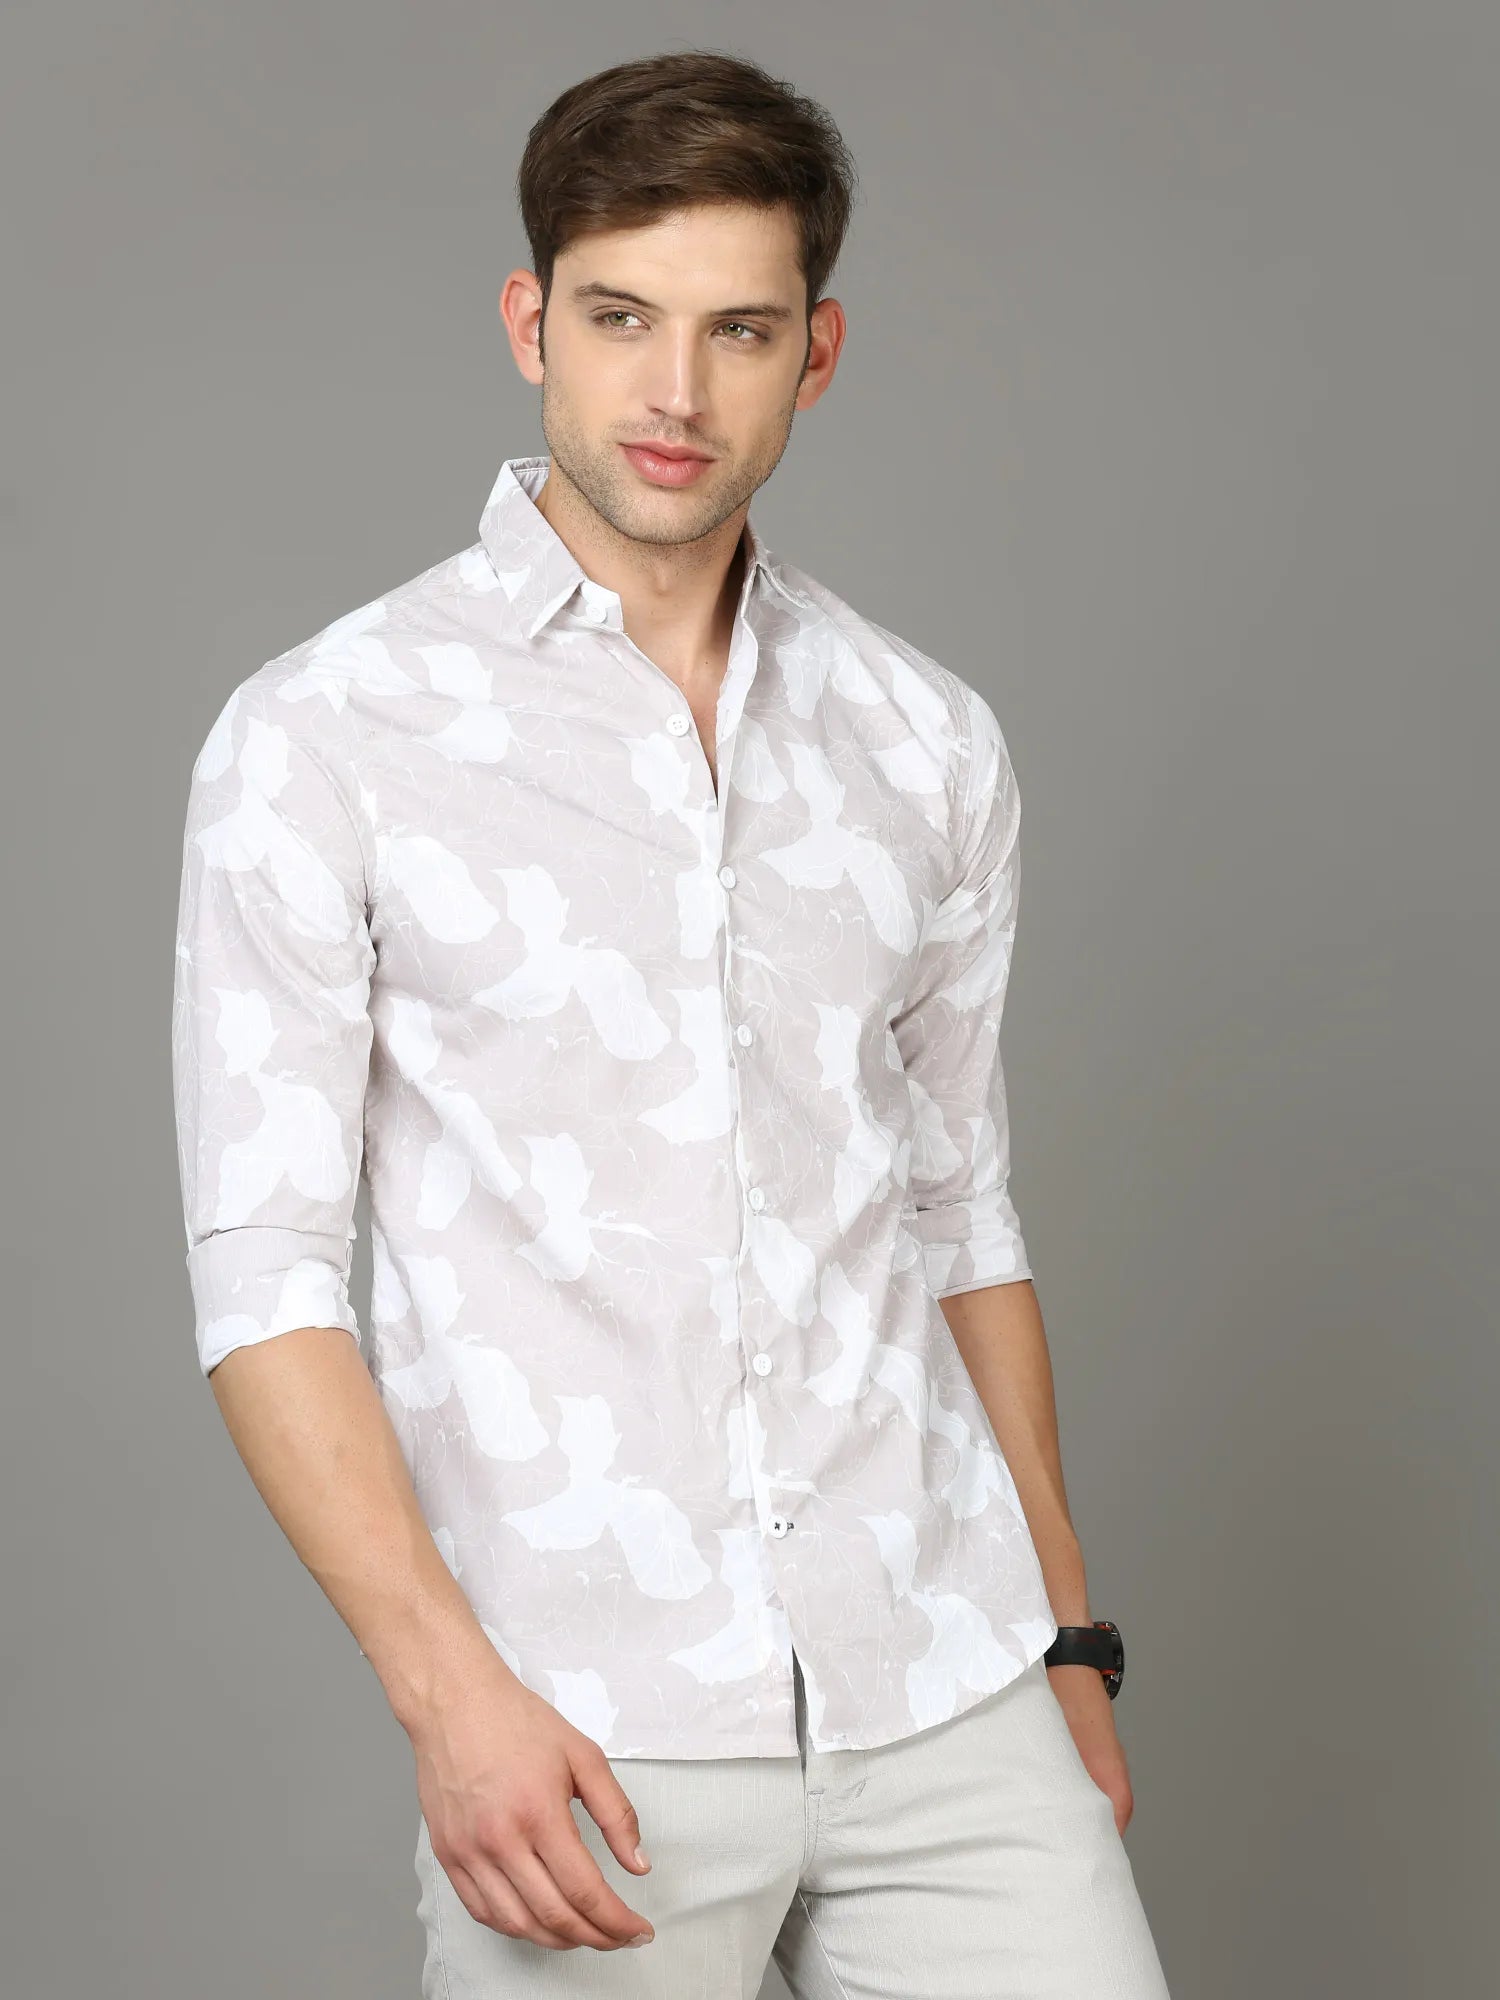 Fashion-forward Print Shirt for Men